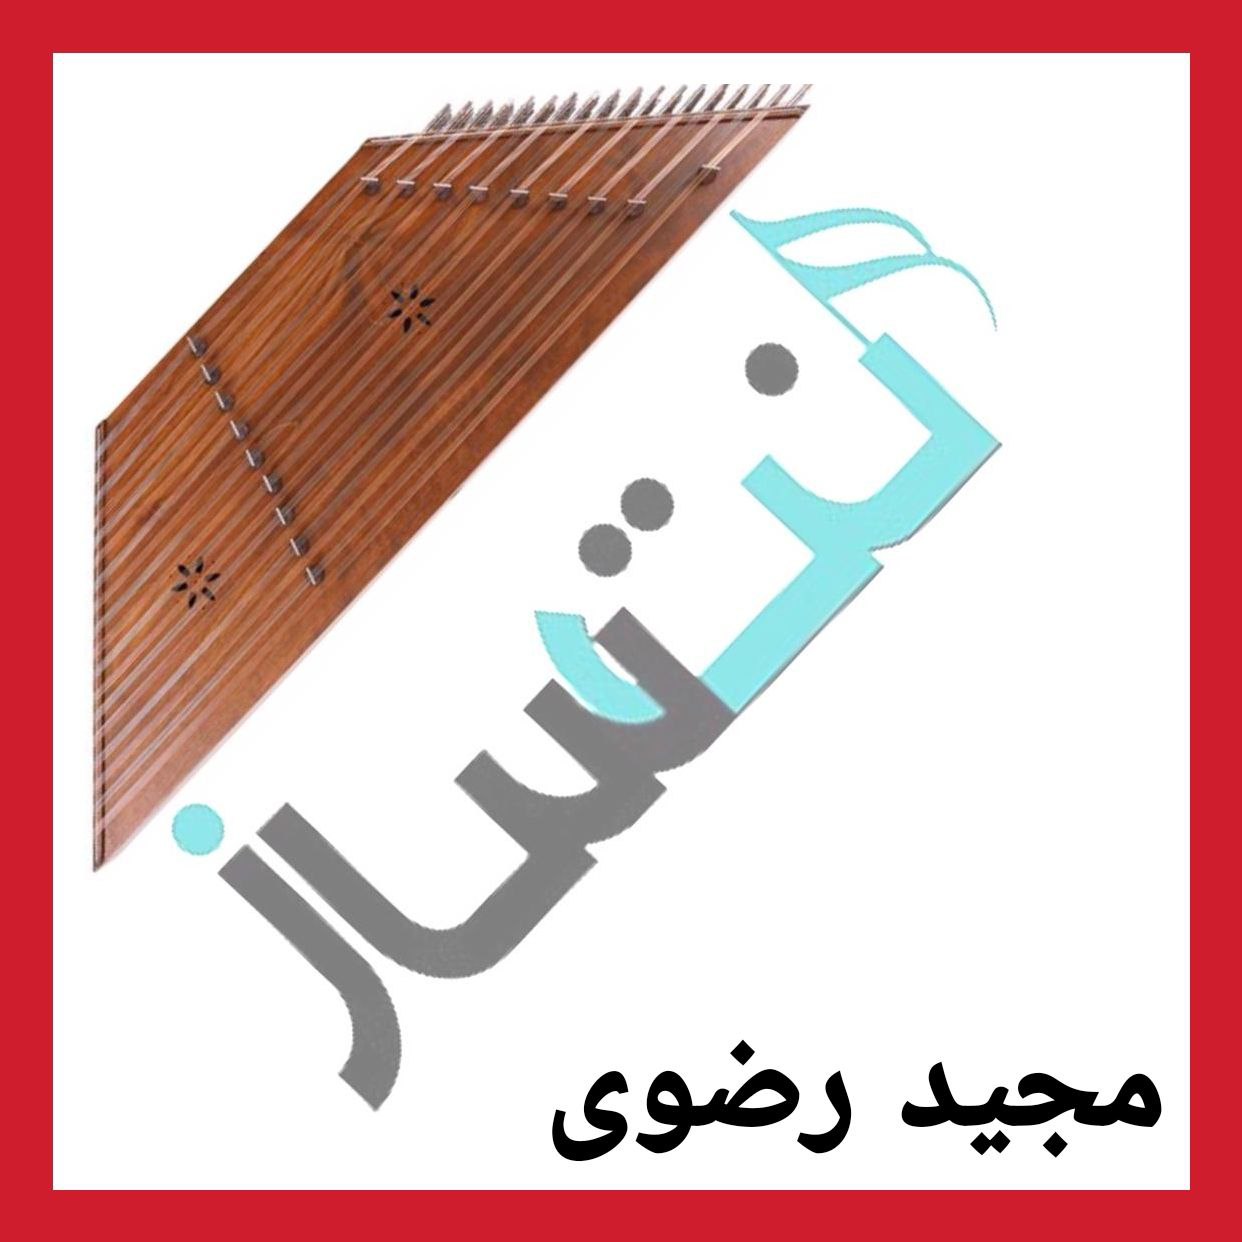 مجید رضوی - نگین قلبمی (ویدیو)